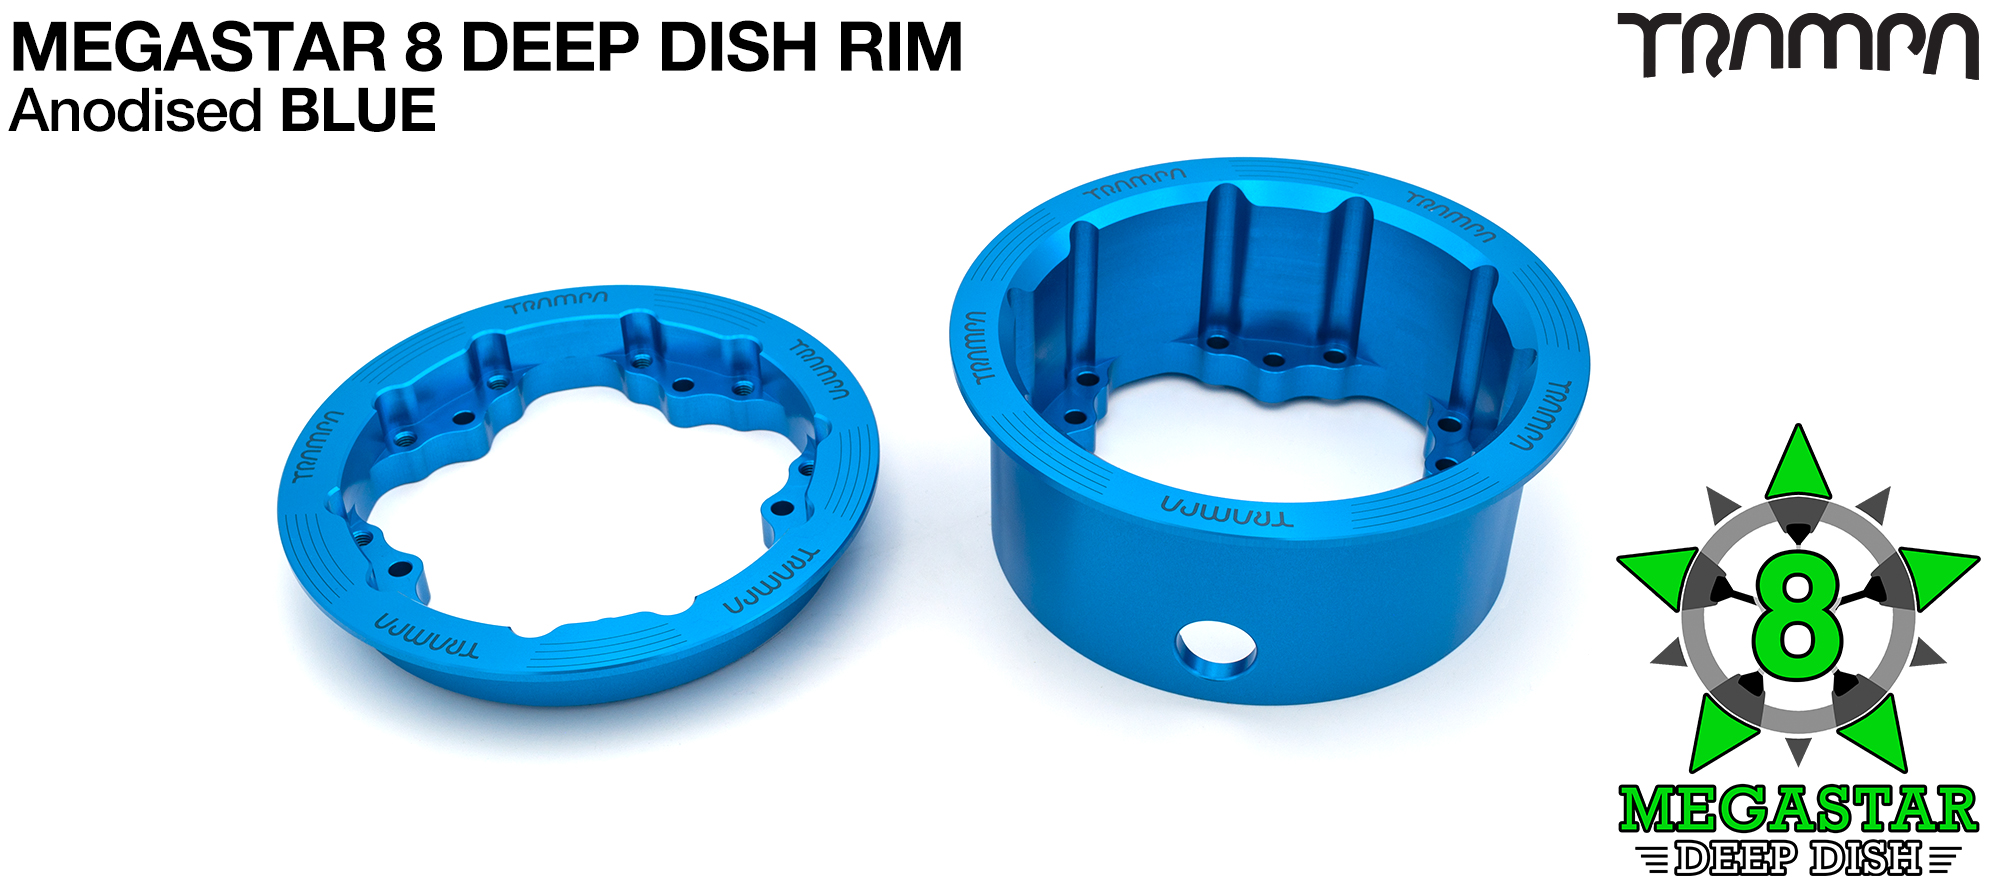 3.75x 2.5 Inch DEEP-DISH MEGASTAR Rims - BLUE 